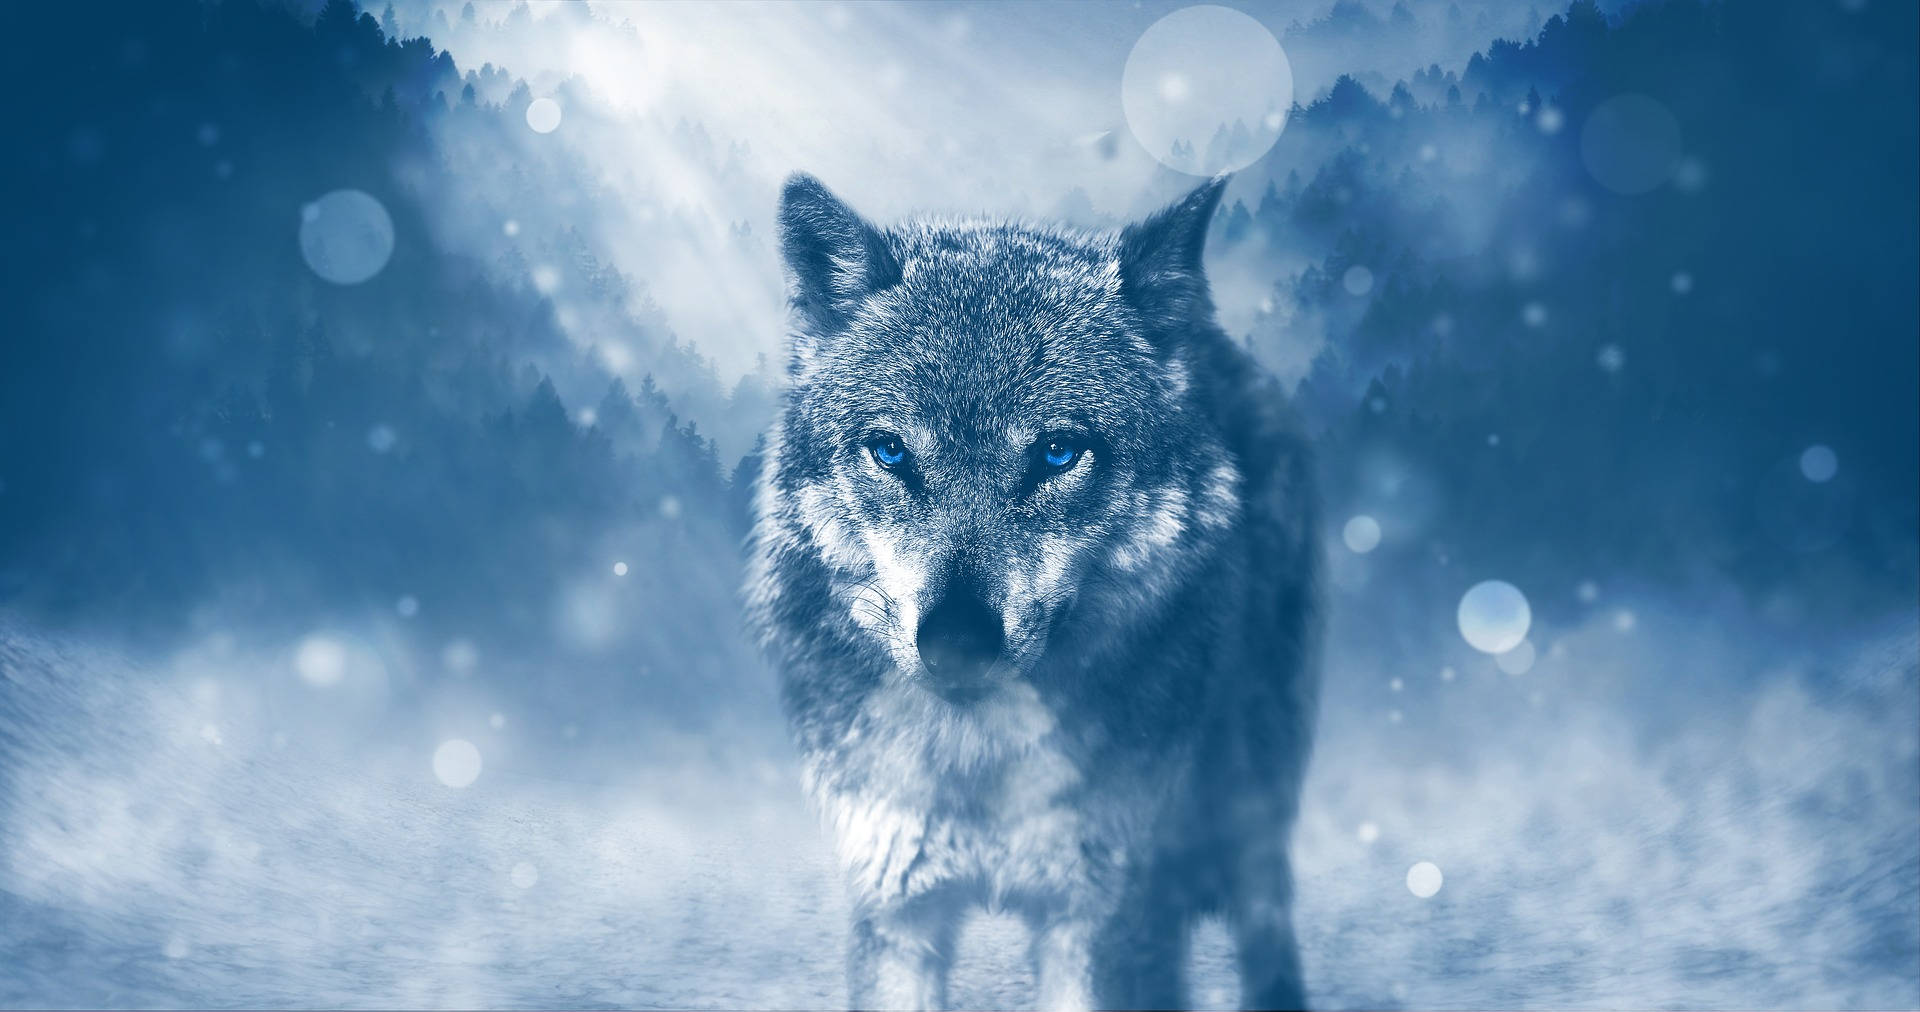 Hd Wolf Winter Wallpaper